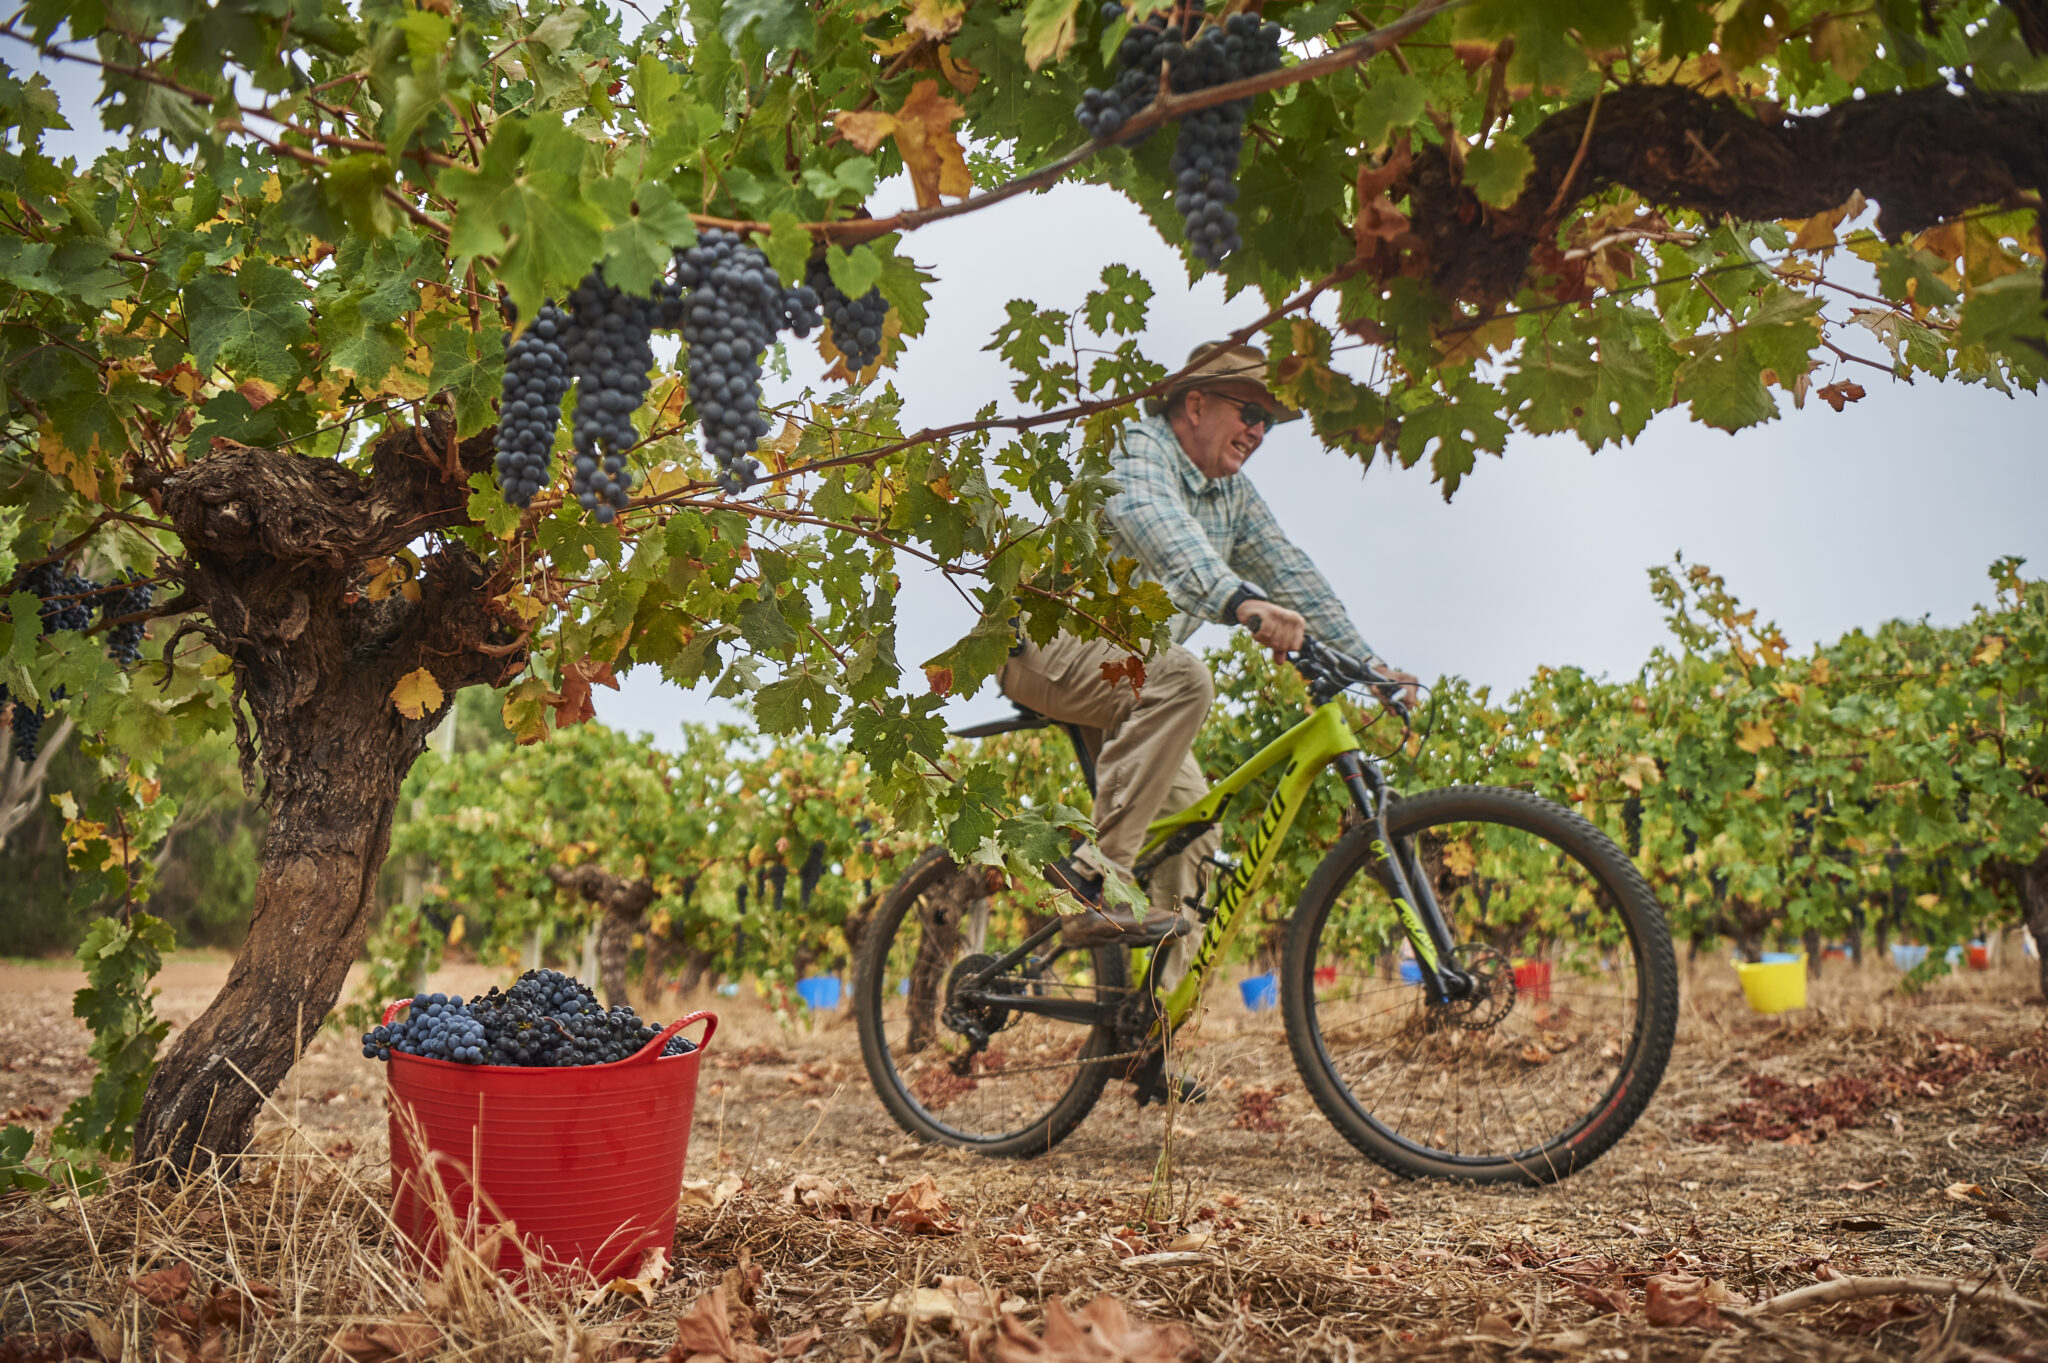 Riding a bike through the vineyard